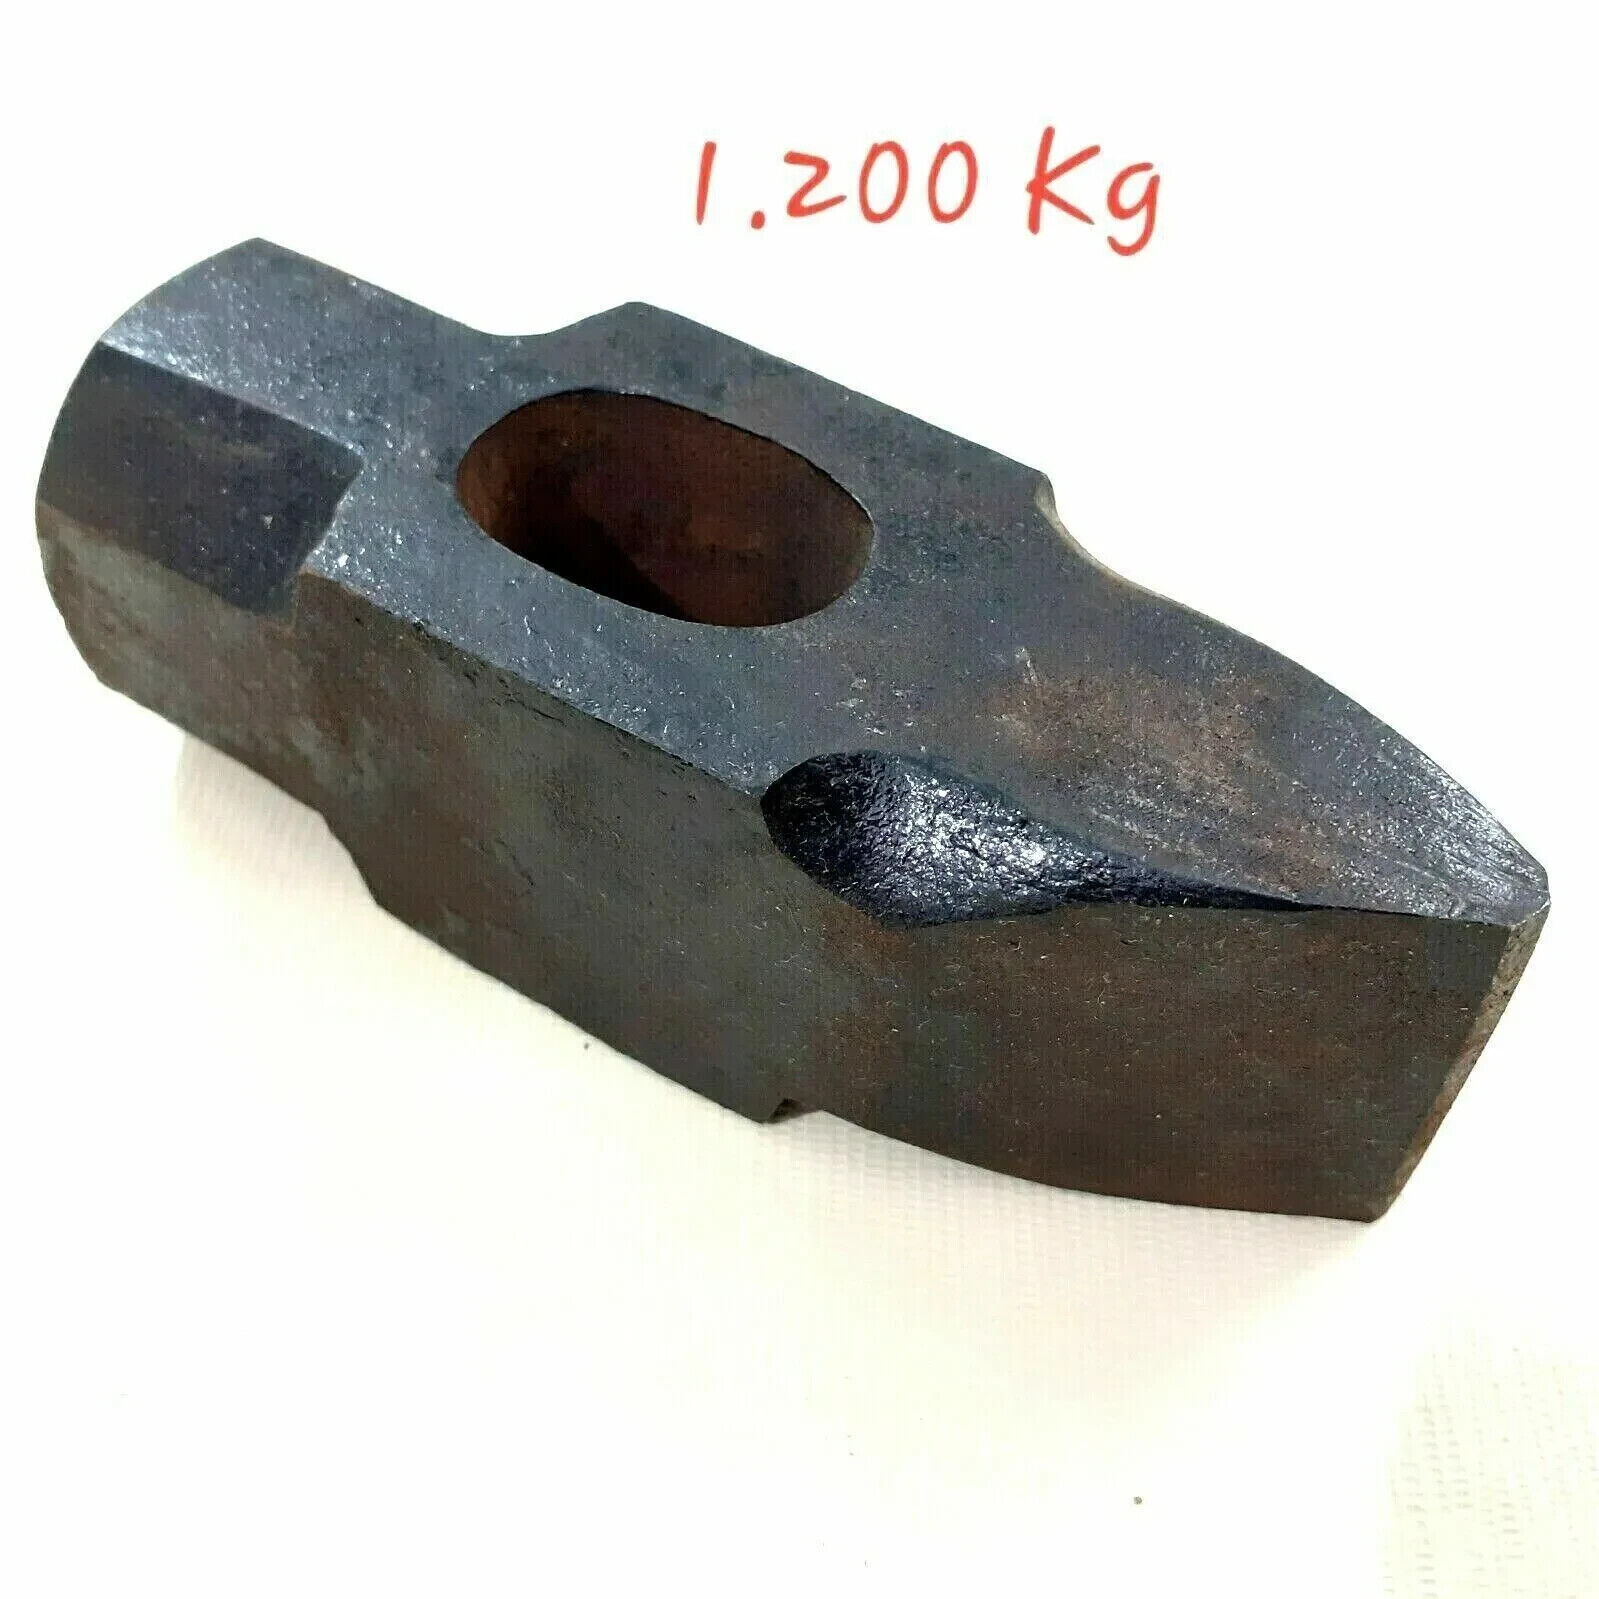 Heavy Iron Hammer Blacksmith Collectible Tool item new